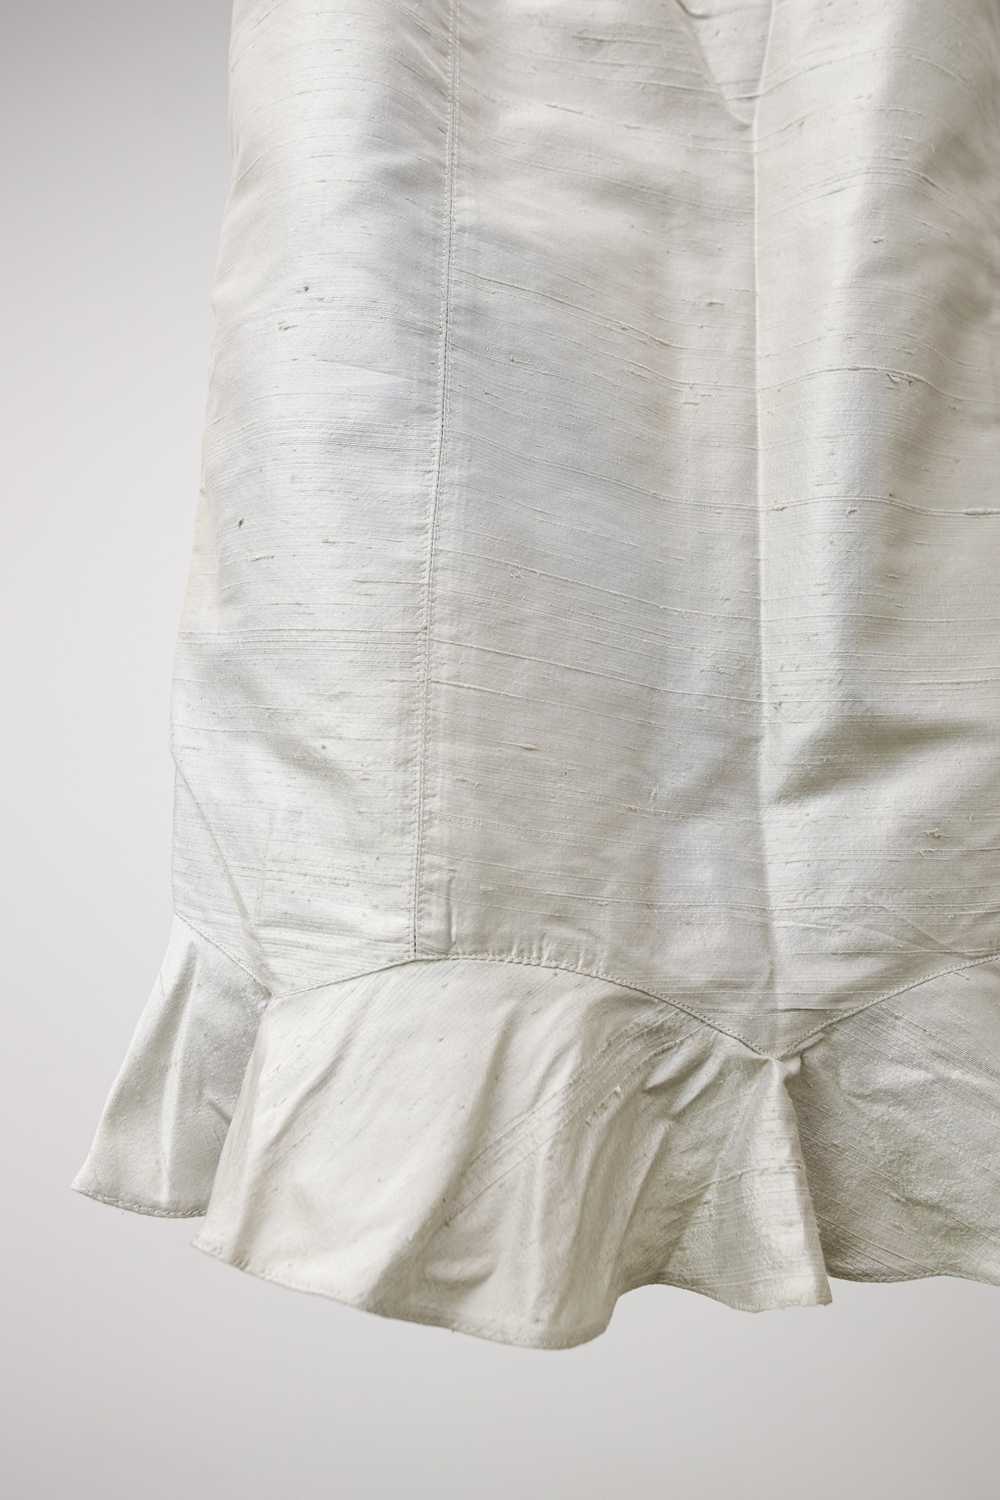 Armani Armani Silk Shantung Skirt - image 4